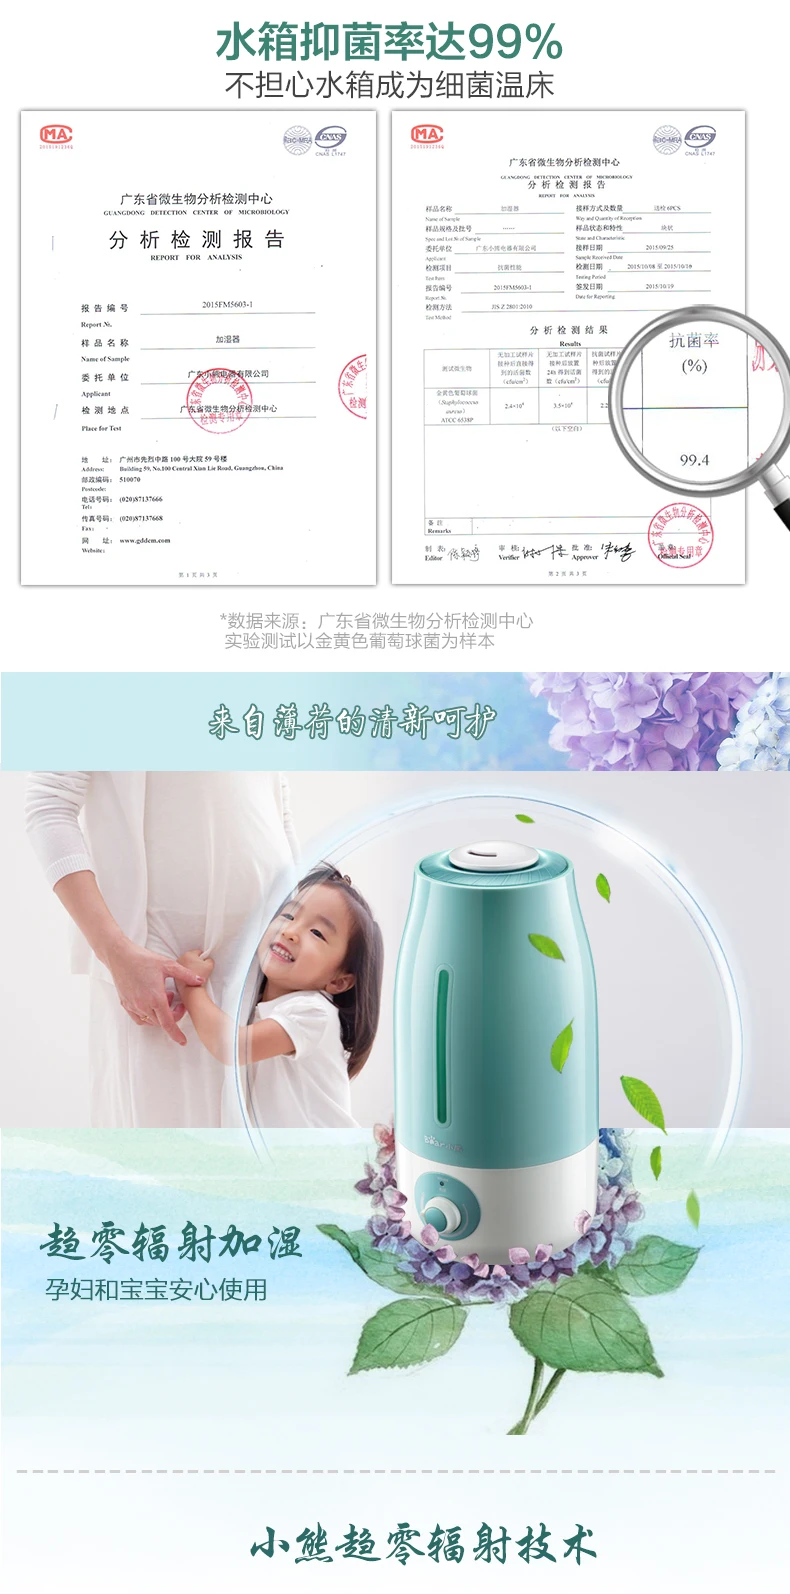 Xiaoxii увлажнитель дома Высокой Емкости Увлажнитель воздуха мини-машина ароматерапия